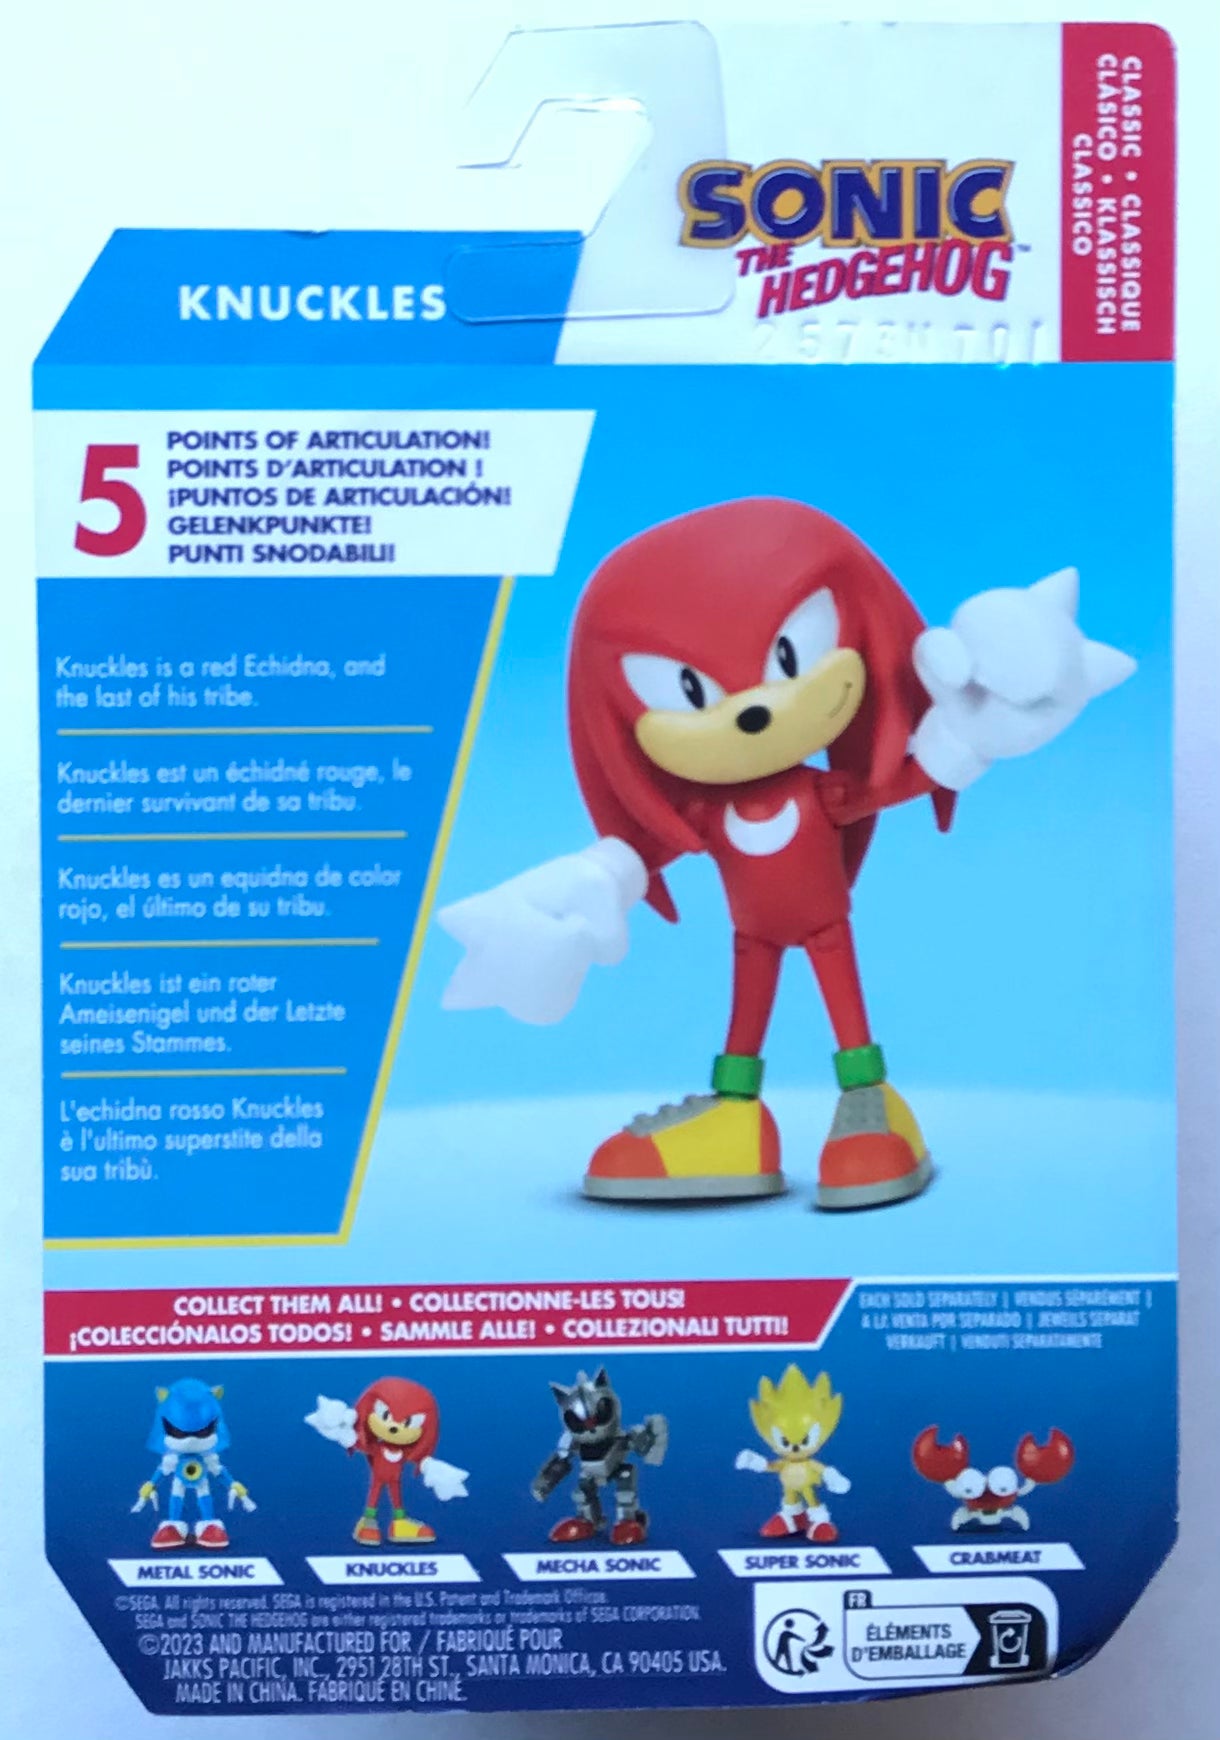 Jakks Sonic 2.5" Inch Wave 15 Classic Knuckles Figure